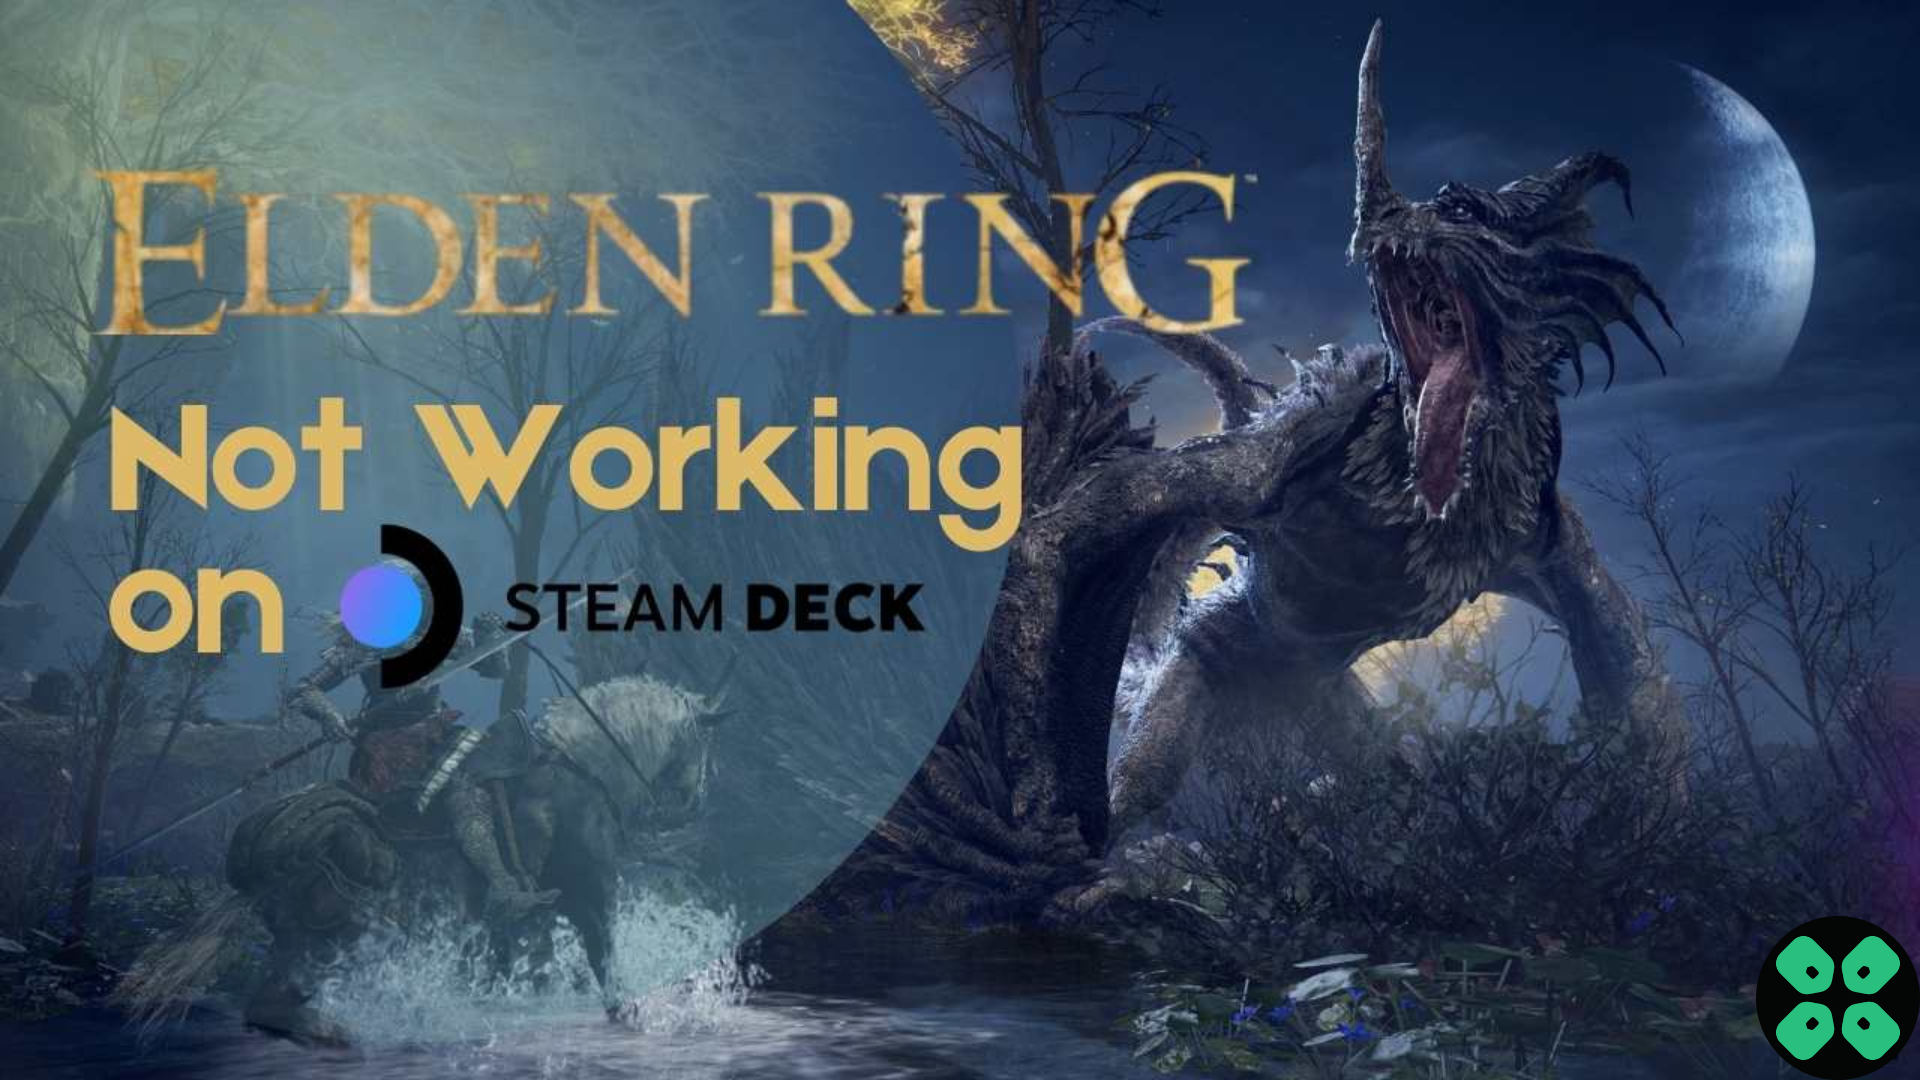 How to Fix Elden ring steam deck not launching